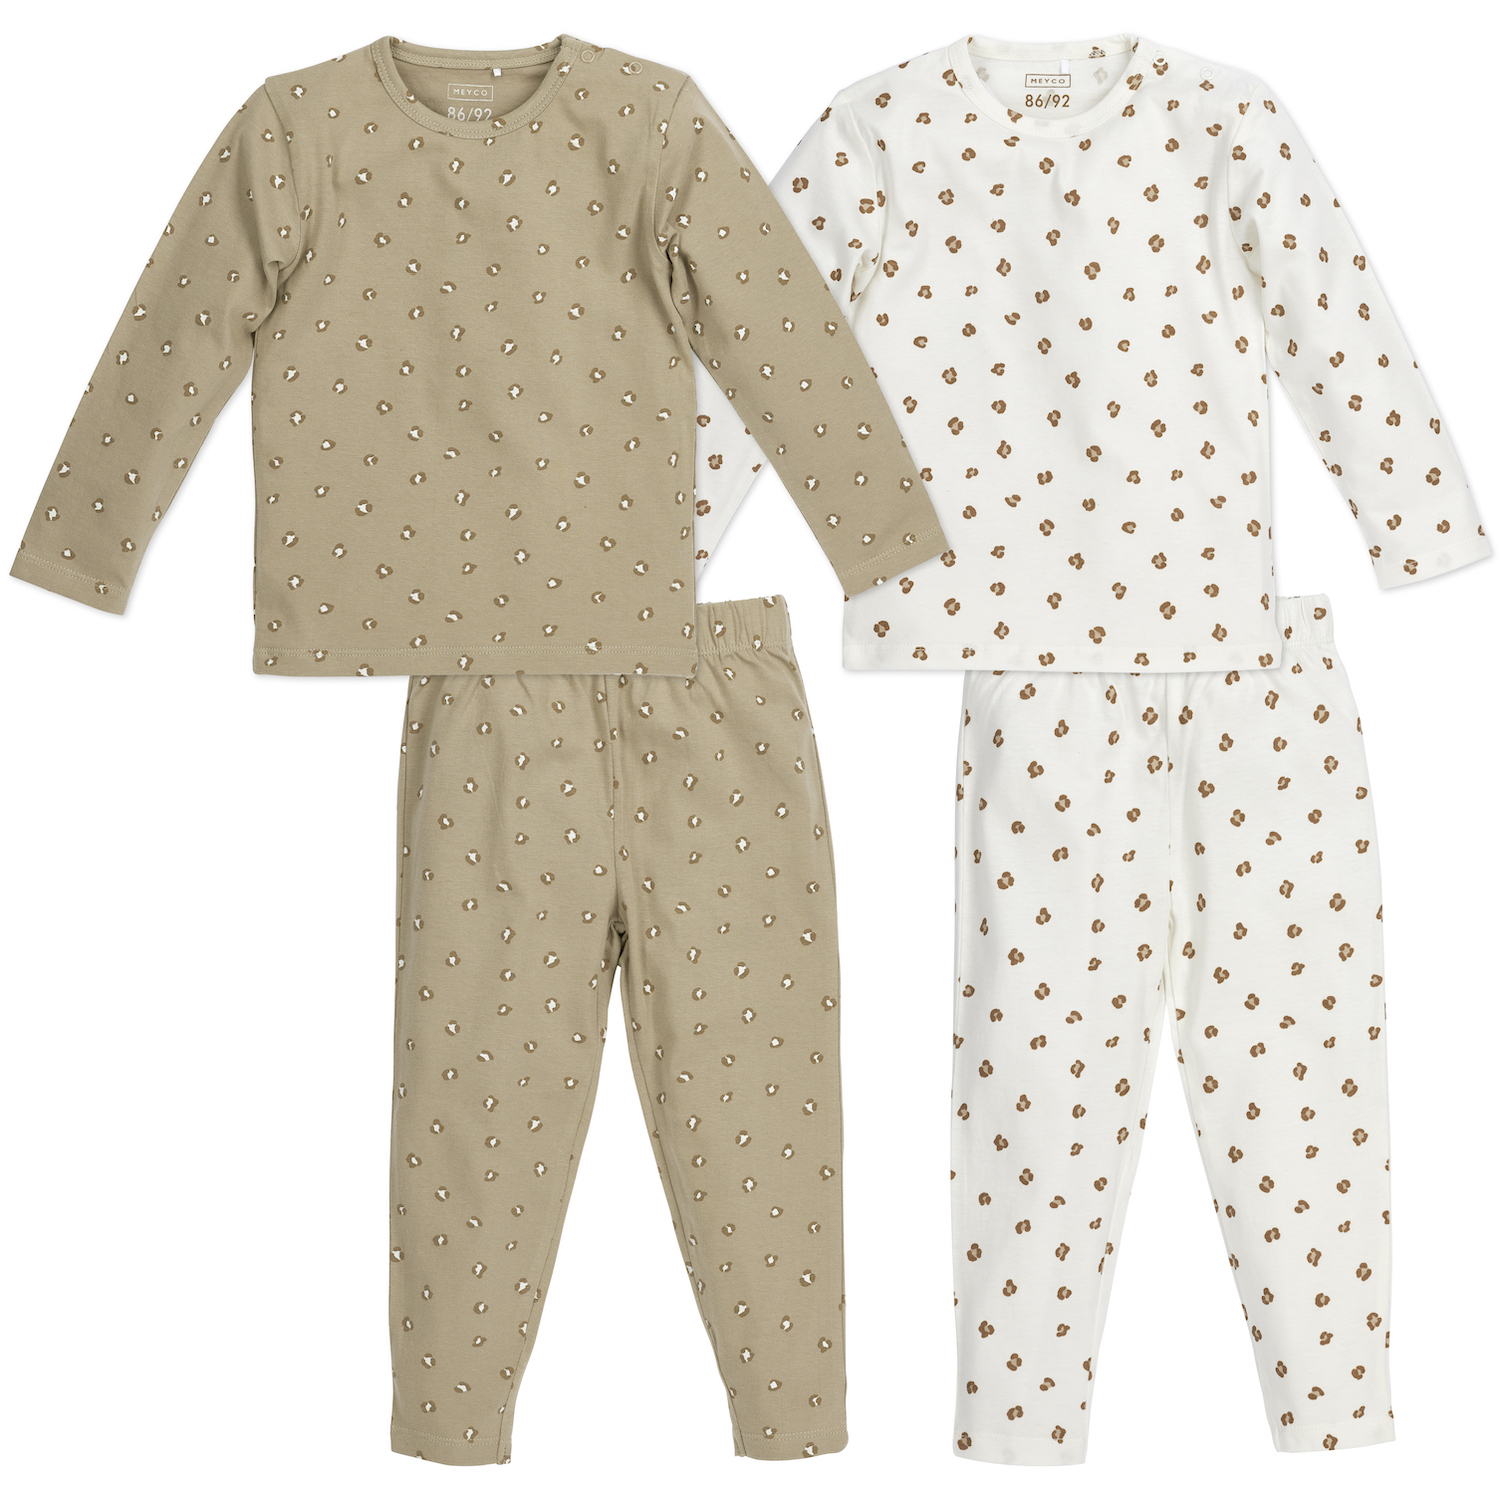 Pyjama 2-pack Mini Panther - Offwhite/Sand - Größe 86/92